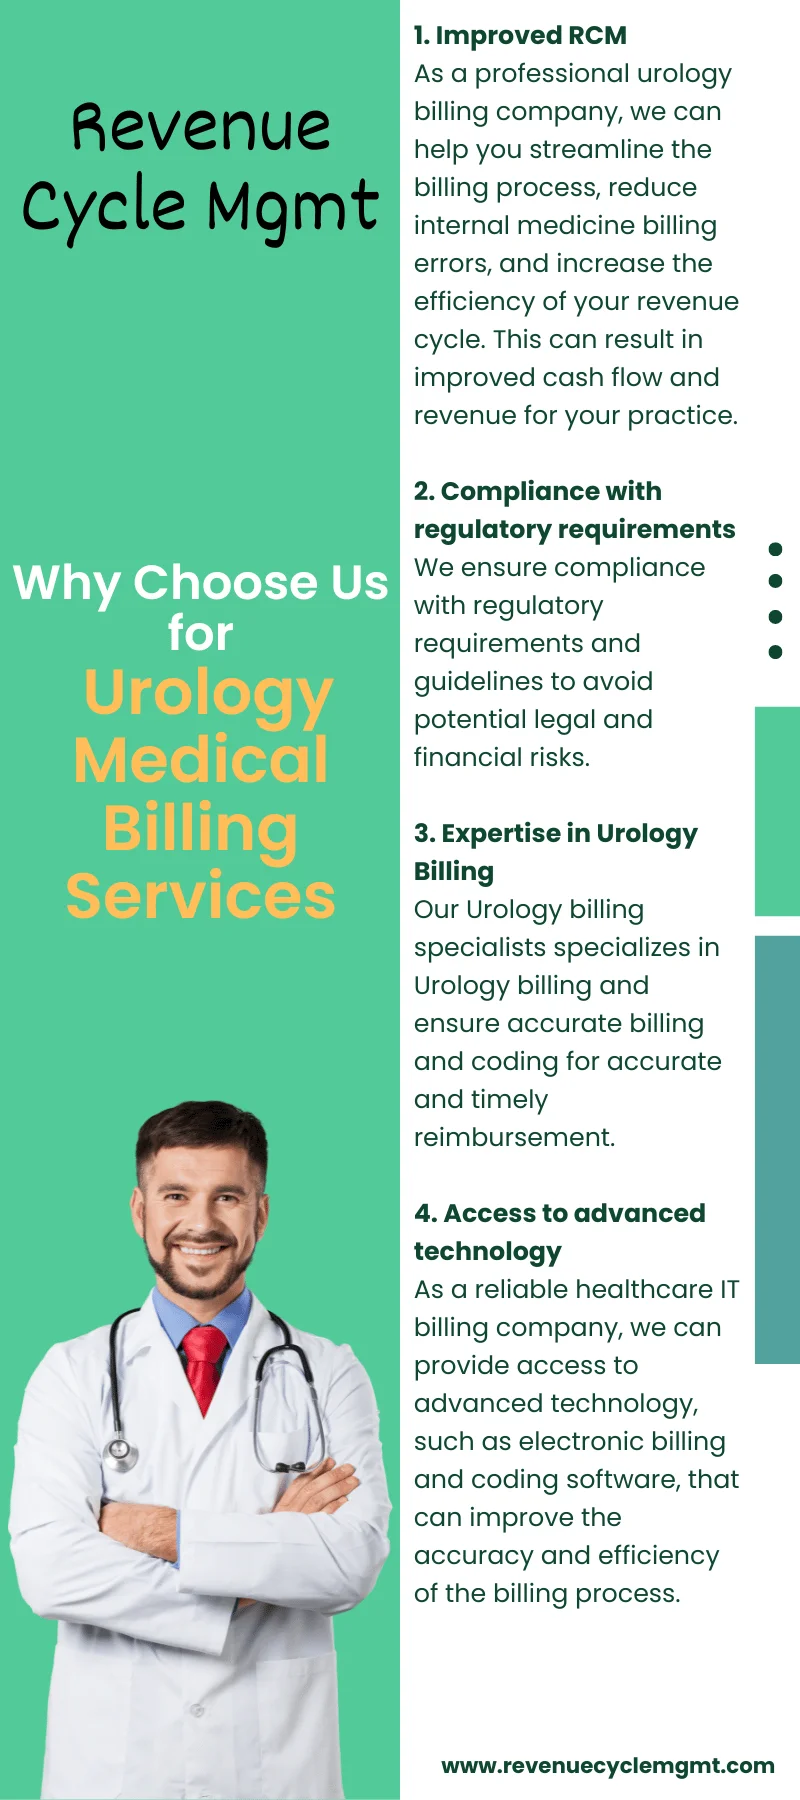 Why Choose Us for Urology Medical Billing Services